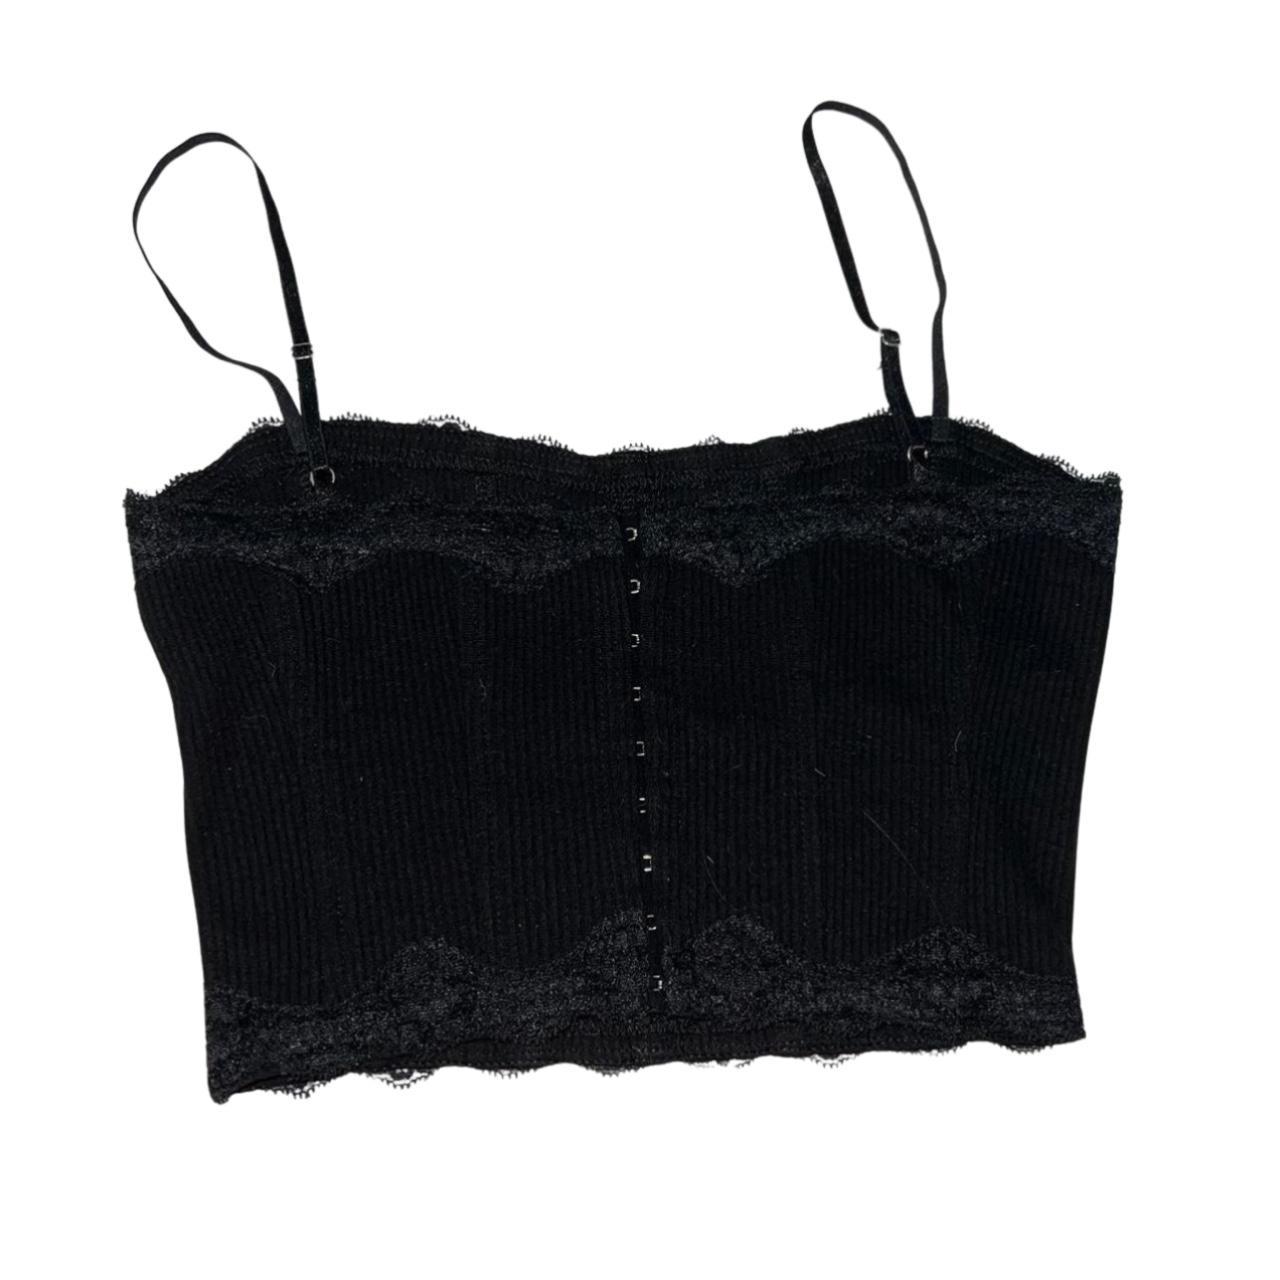 Product Image 2 - Corset like I.AM.GIA black cami
Size:small
Price: